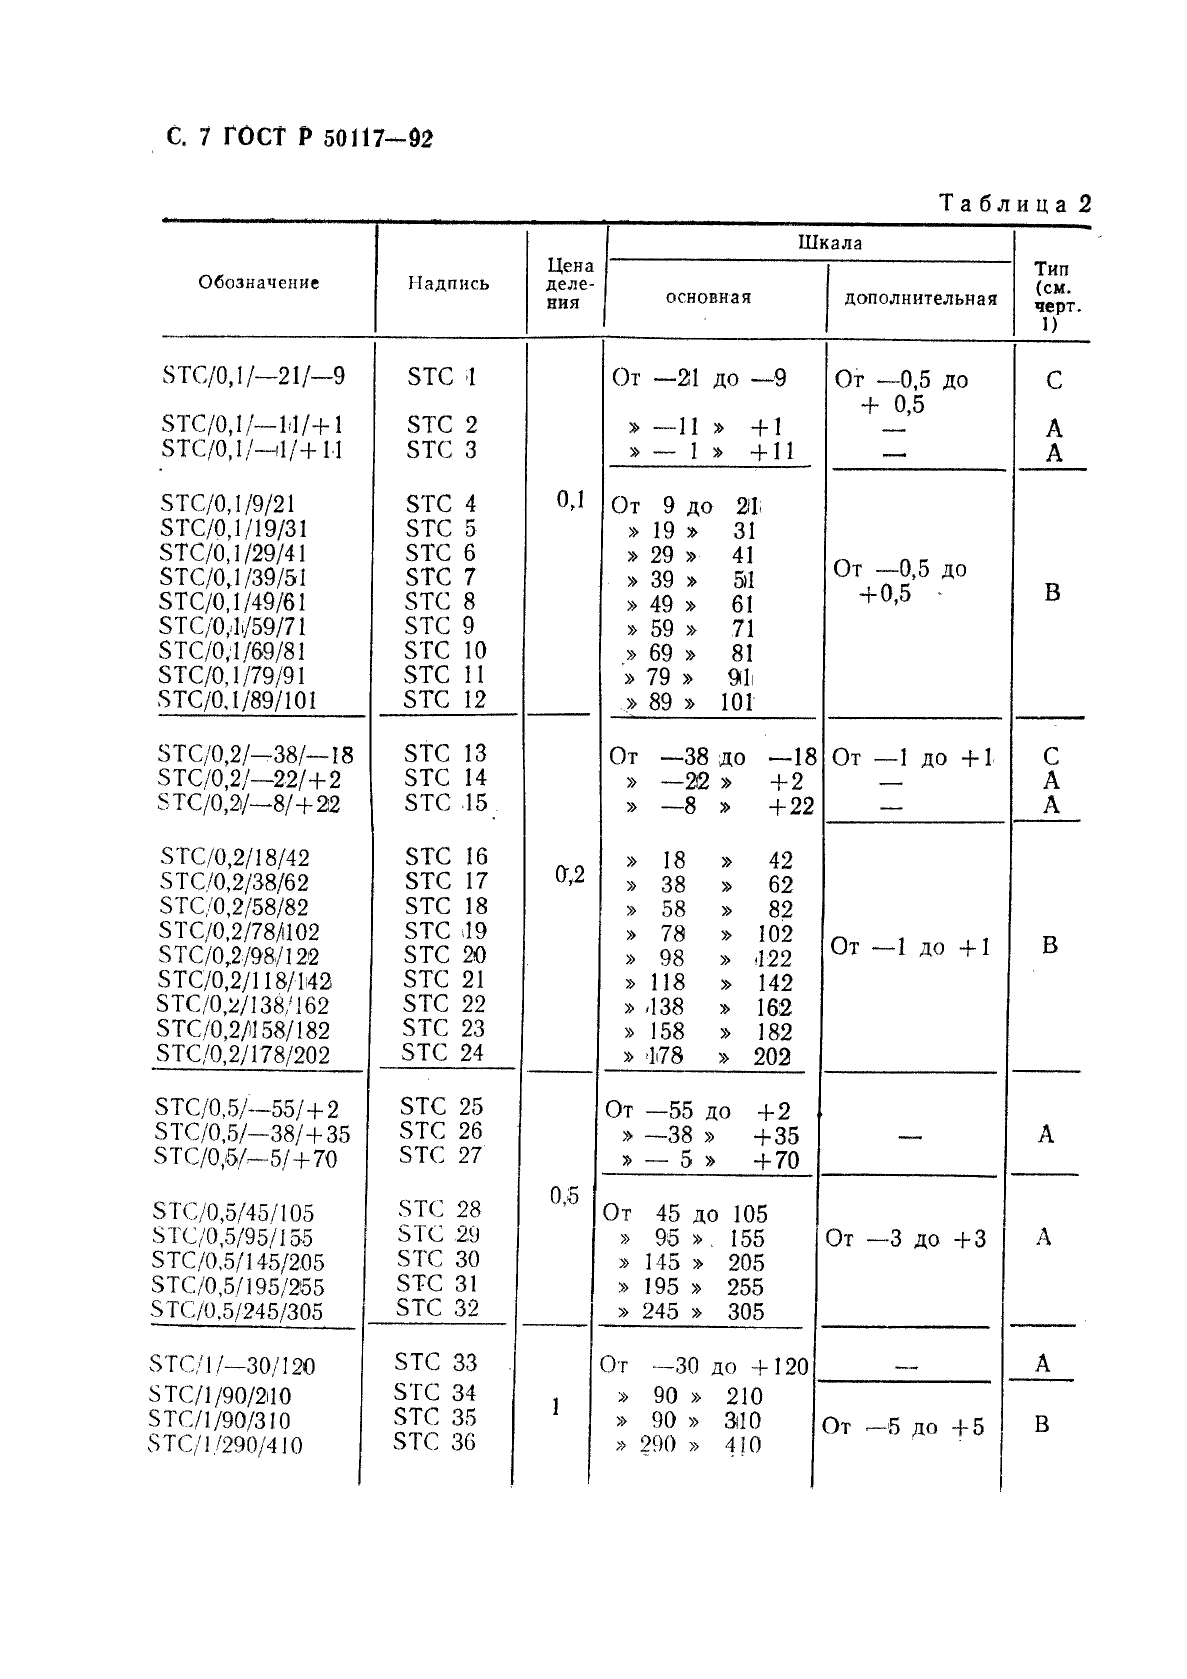 ГОСТ Р 50117-92